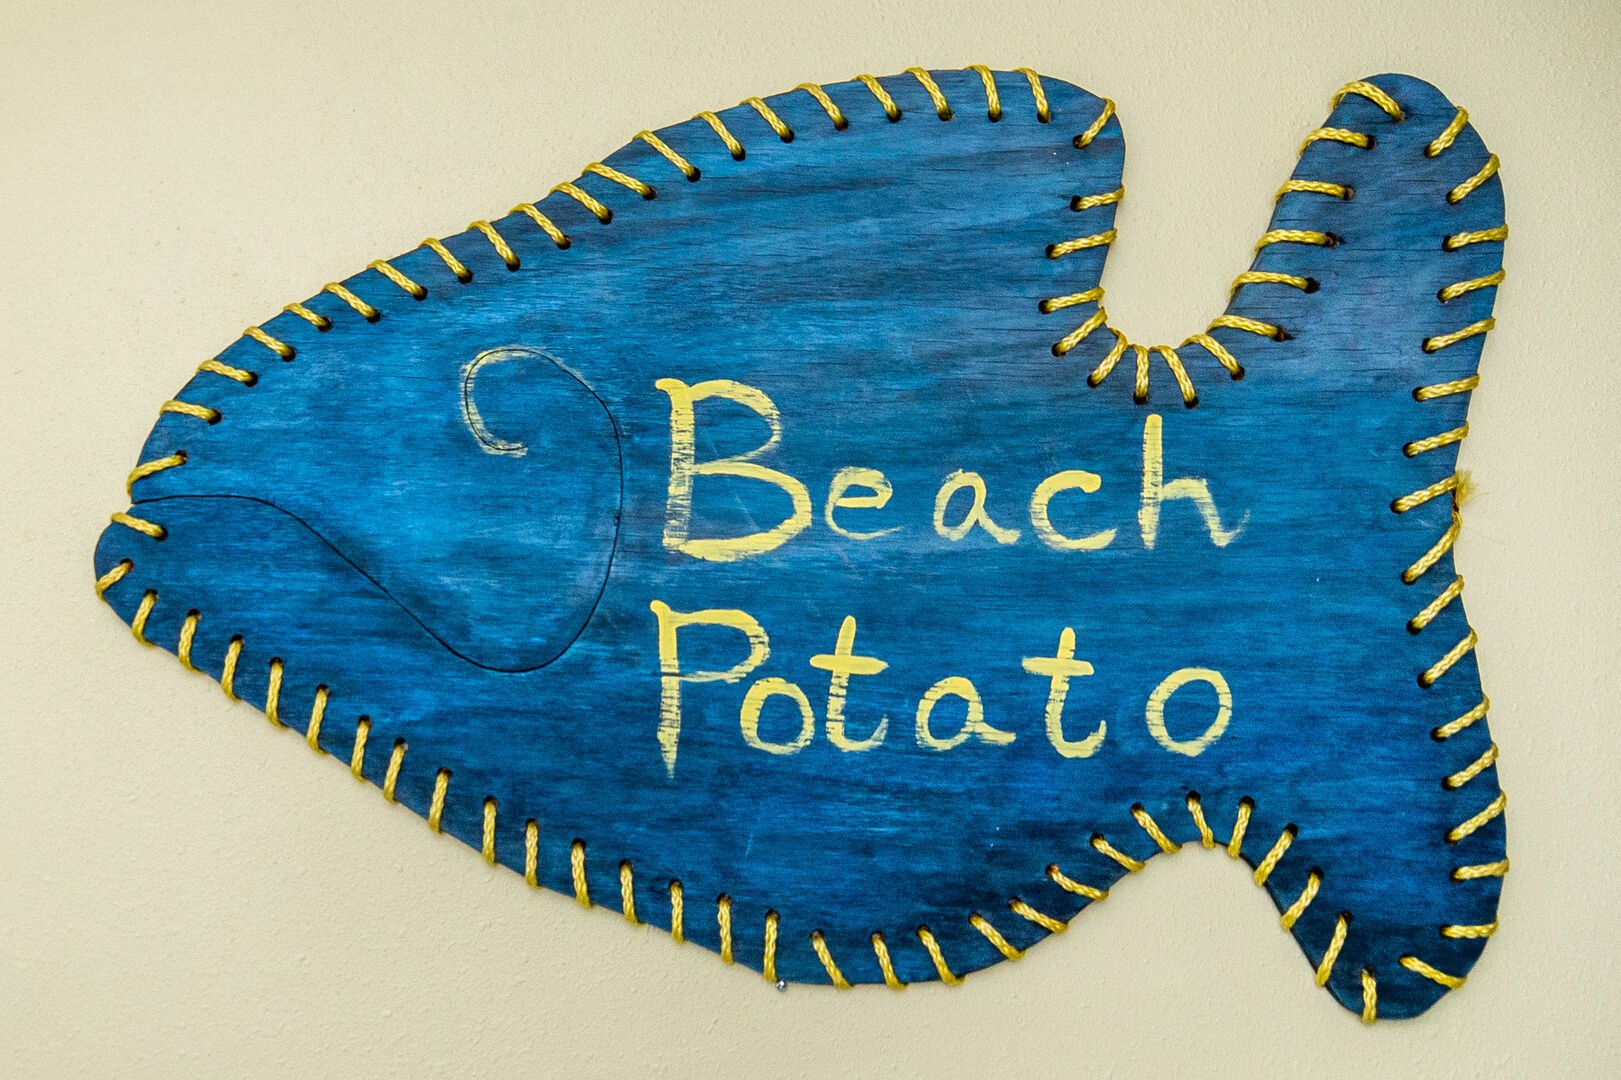 Beach Potato property name plaque